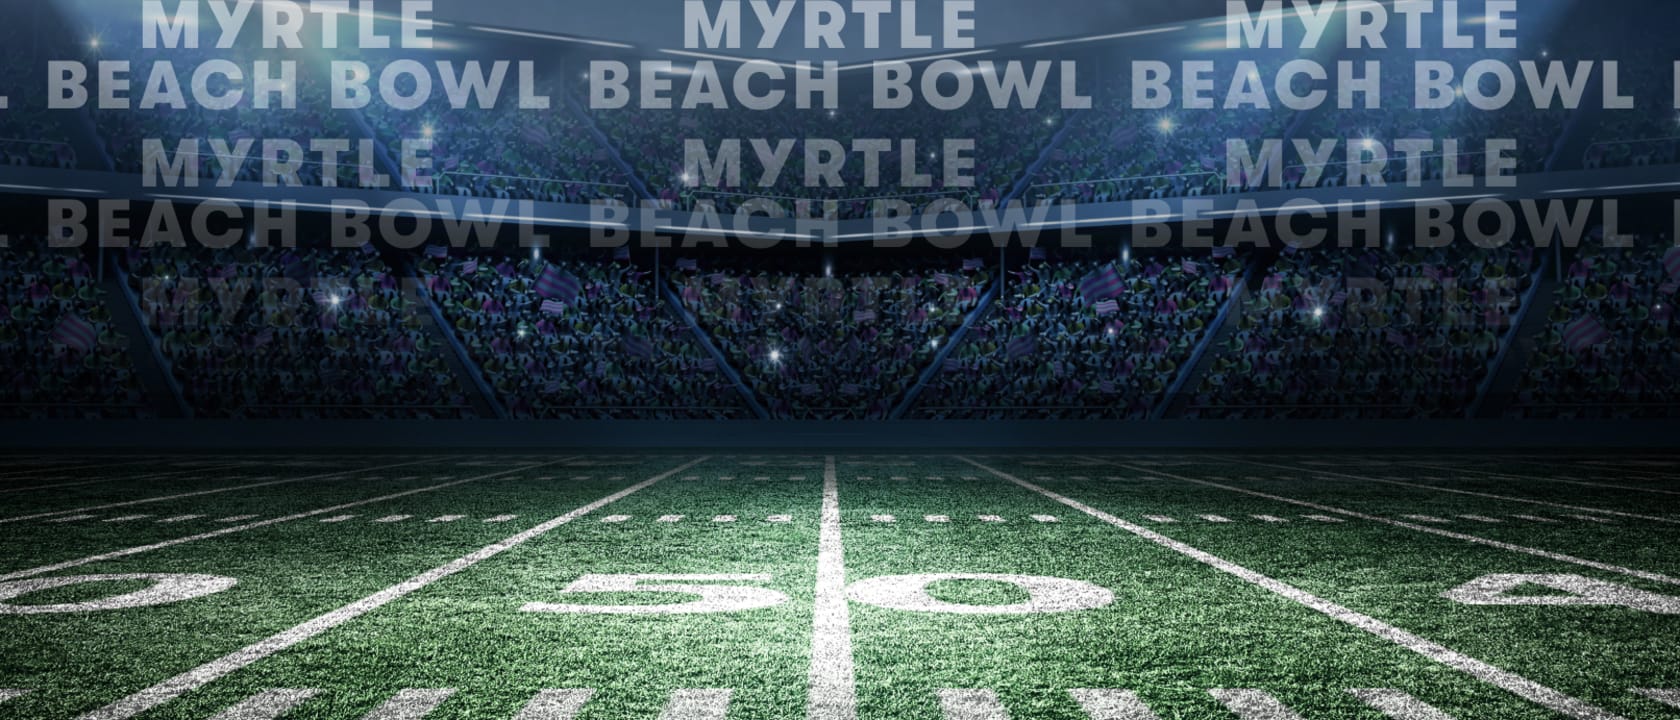 Myrtle Beach Bowl